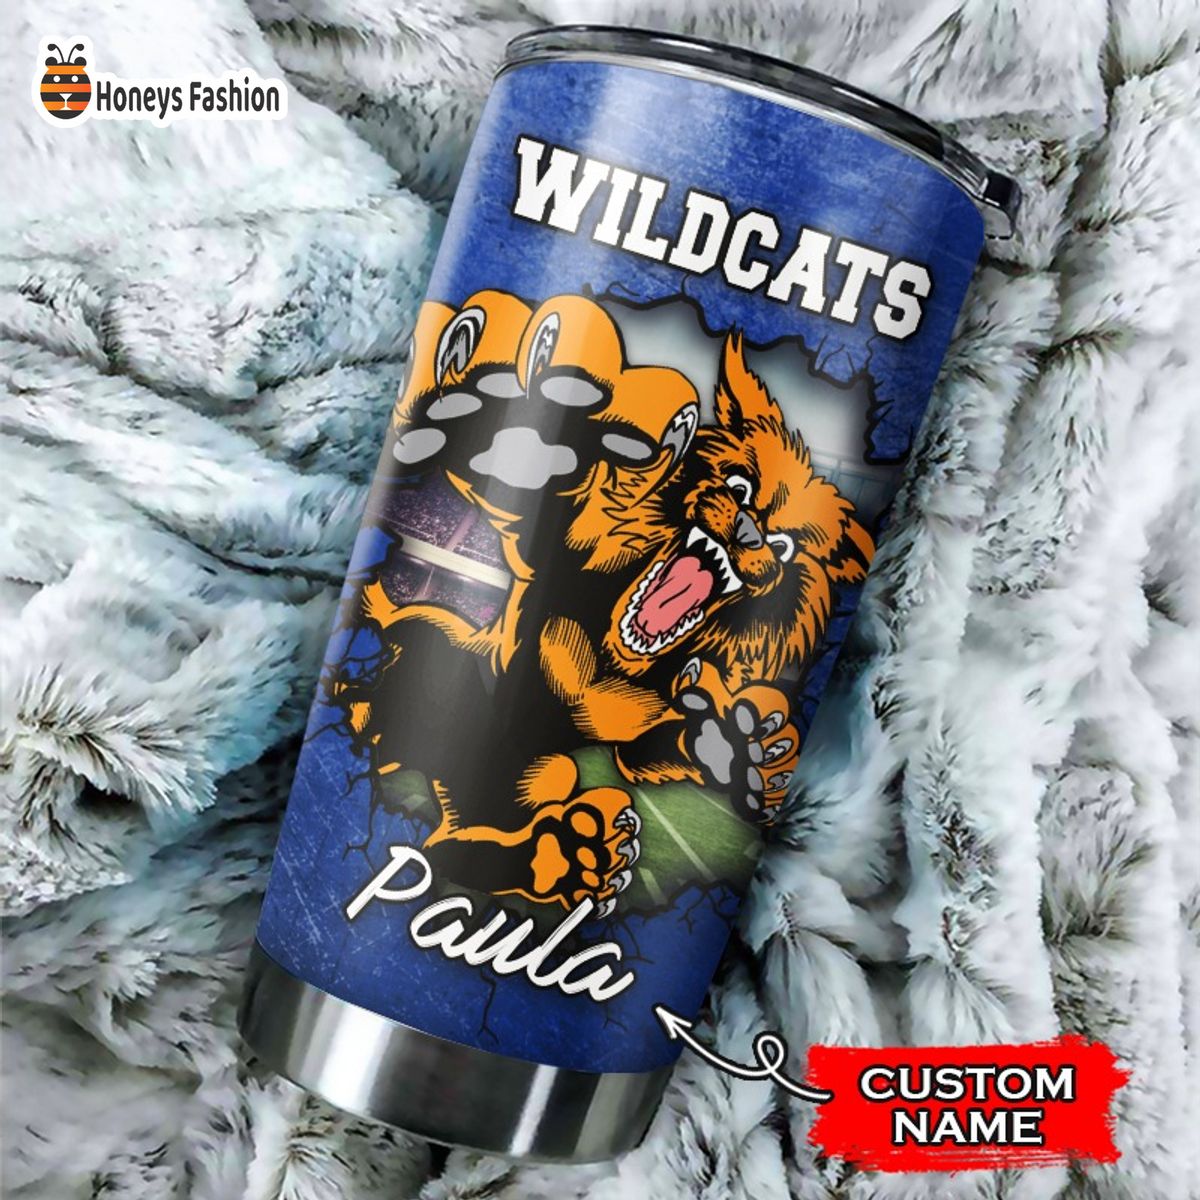 Kentucky Wildcats NCAA Custom Name Tumbler